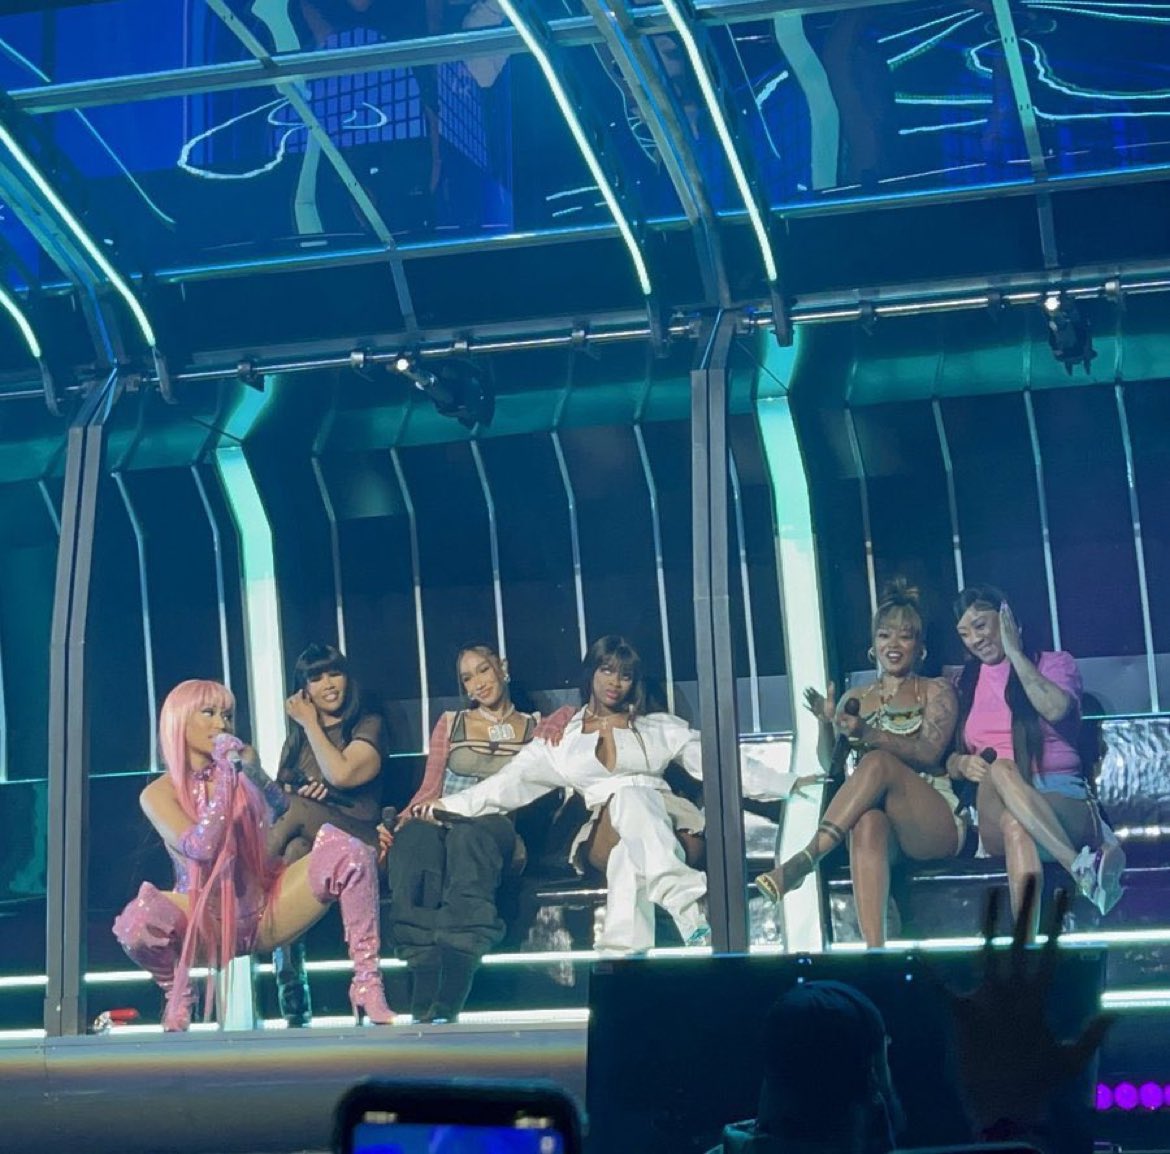 Nicki Minaj, JT, Bia, Akbar V, Katie Got Bandz & Maliibu Miitch on stage at the “Pink Friday 2” World Tour in Boston 📸